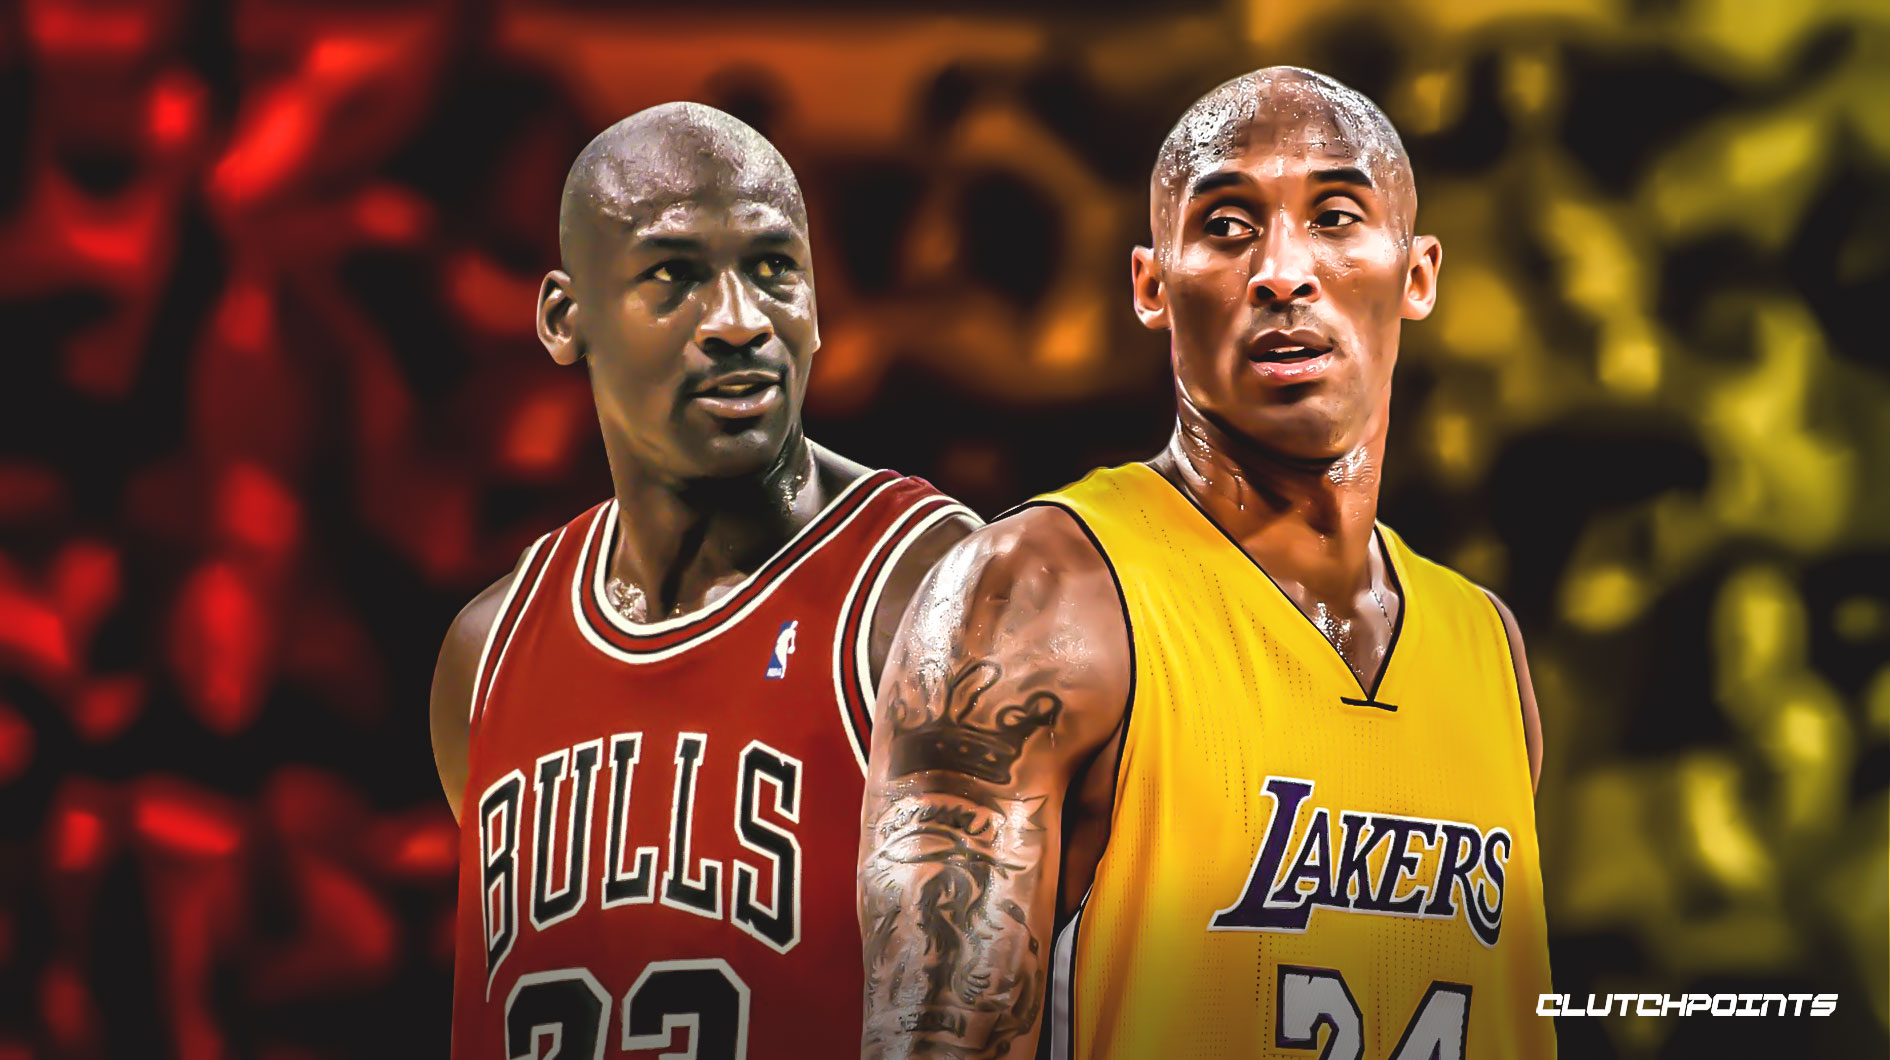 Michael Jordan για Kobe Bryant: “Ήταν σαν μικρός μου αδελφός”